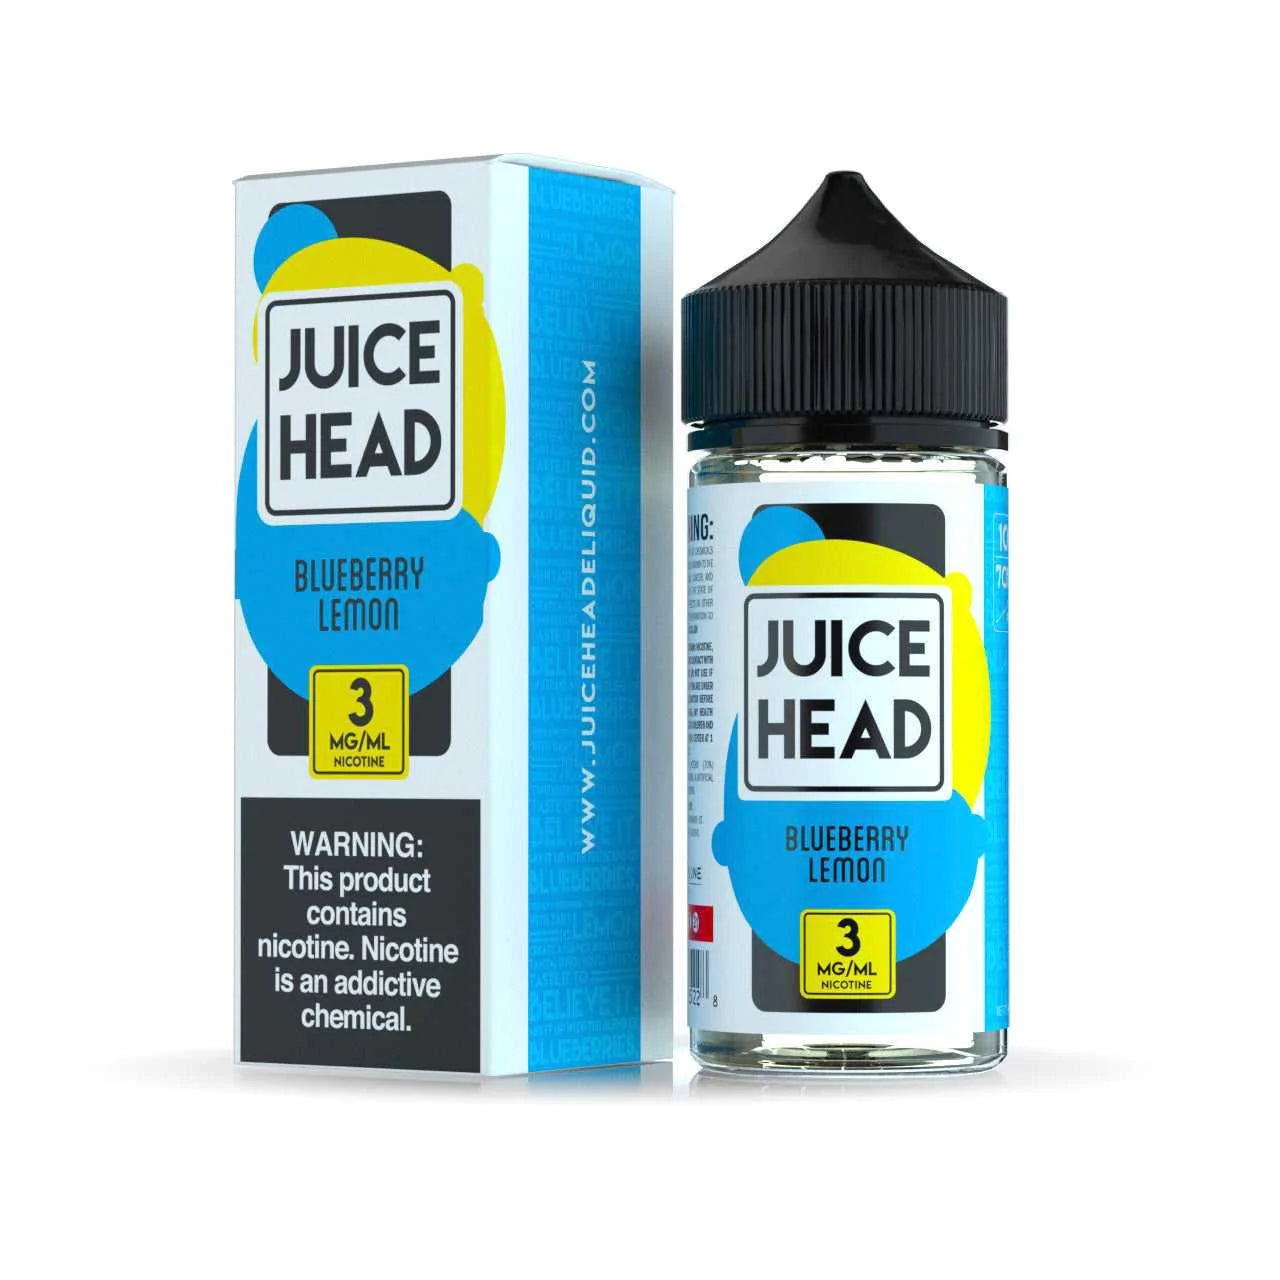 Juice Head: Blueberry Lemon